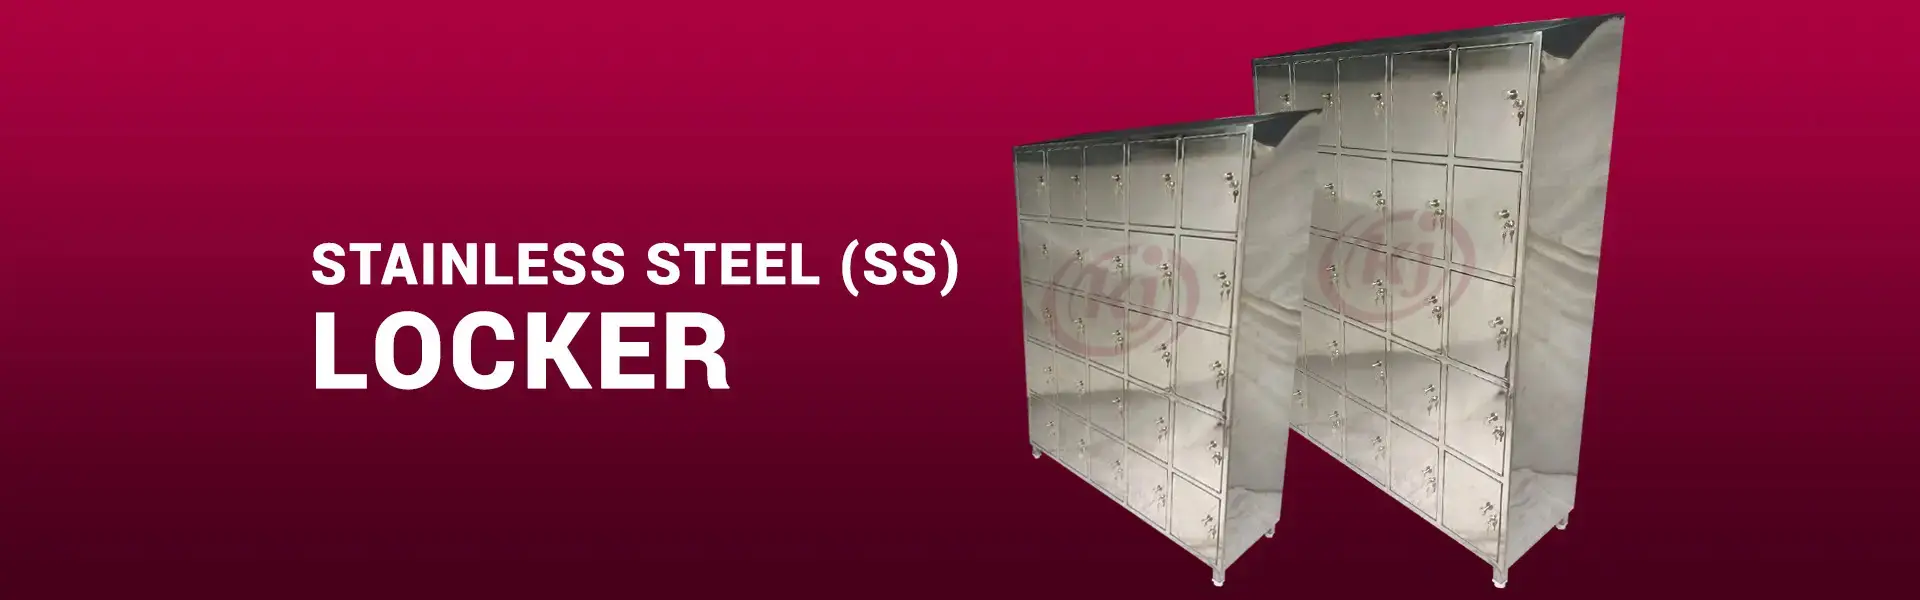 stainless steel (SS) locker Manufacturer